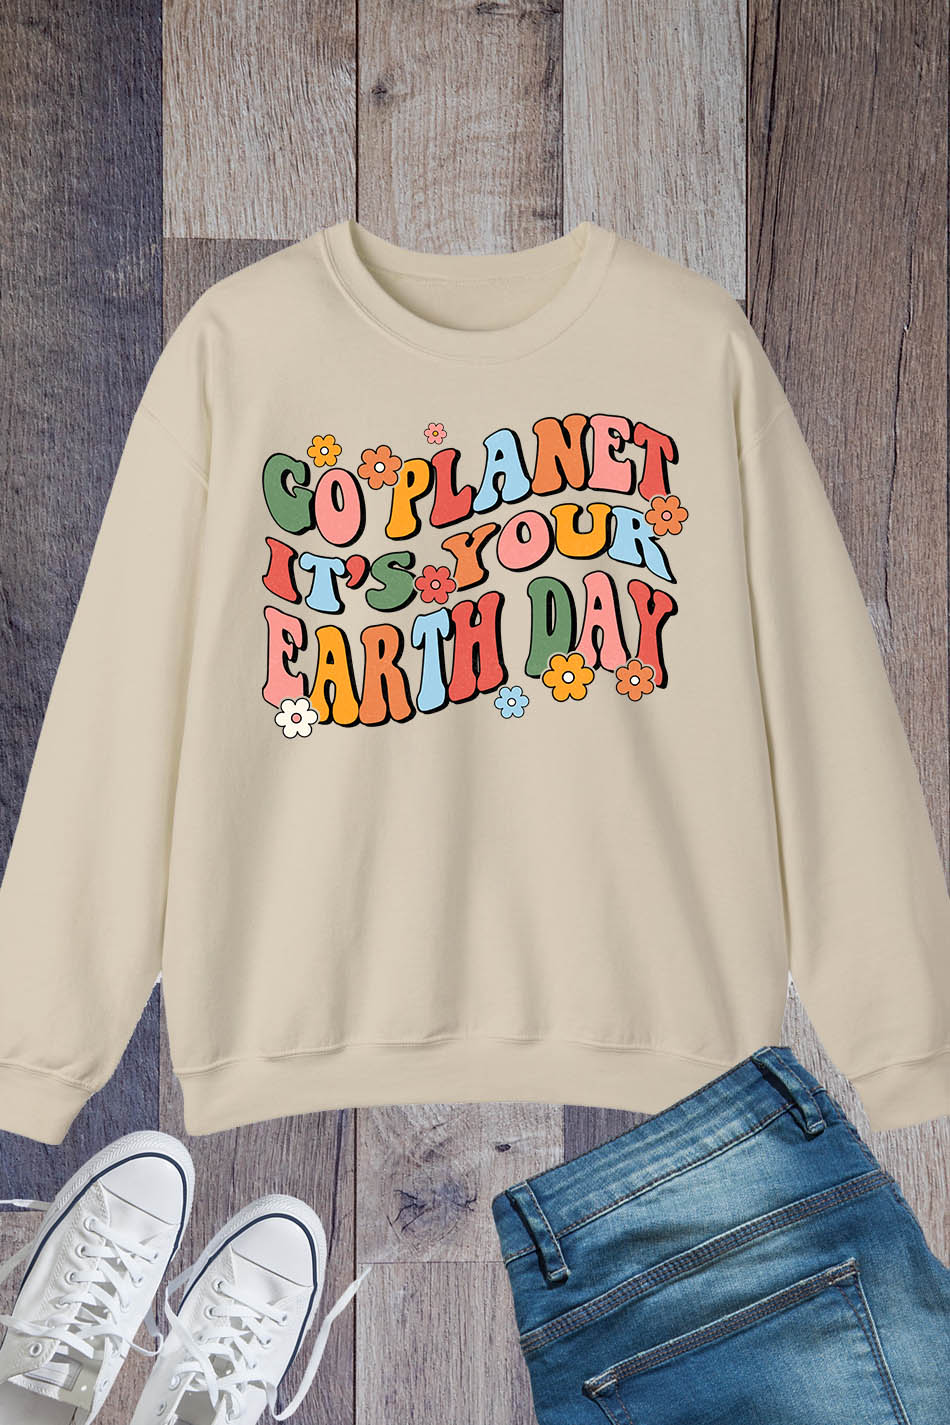 Go Planet It's your Earth Day Sweatshirt